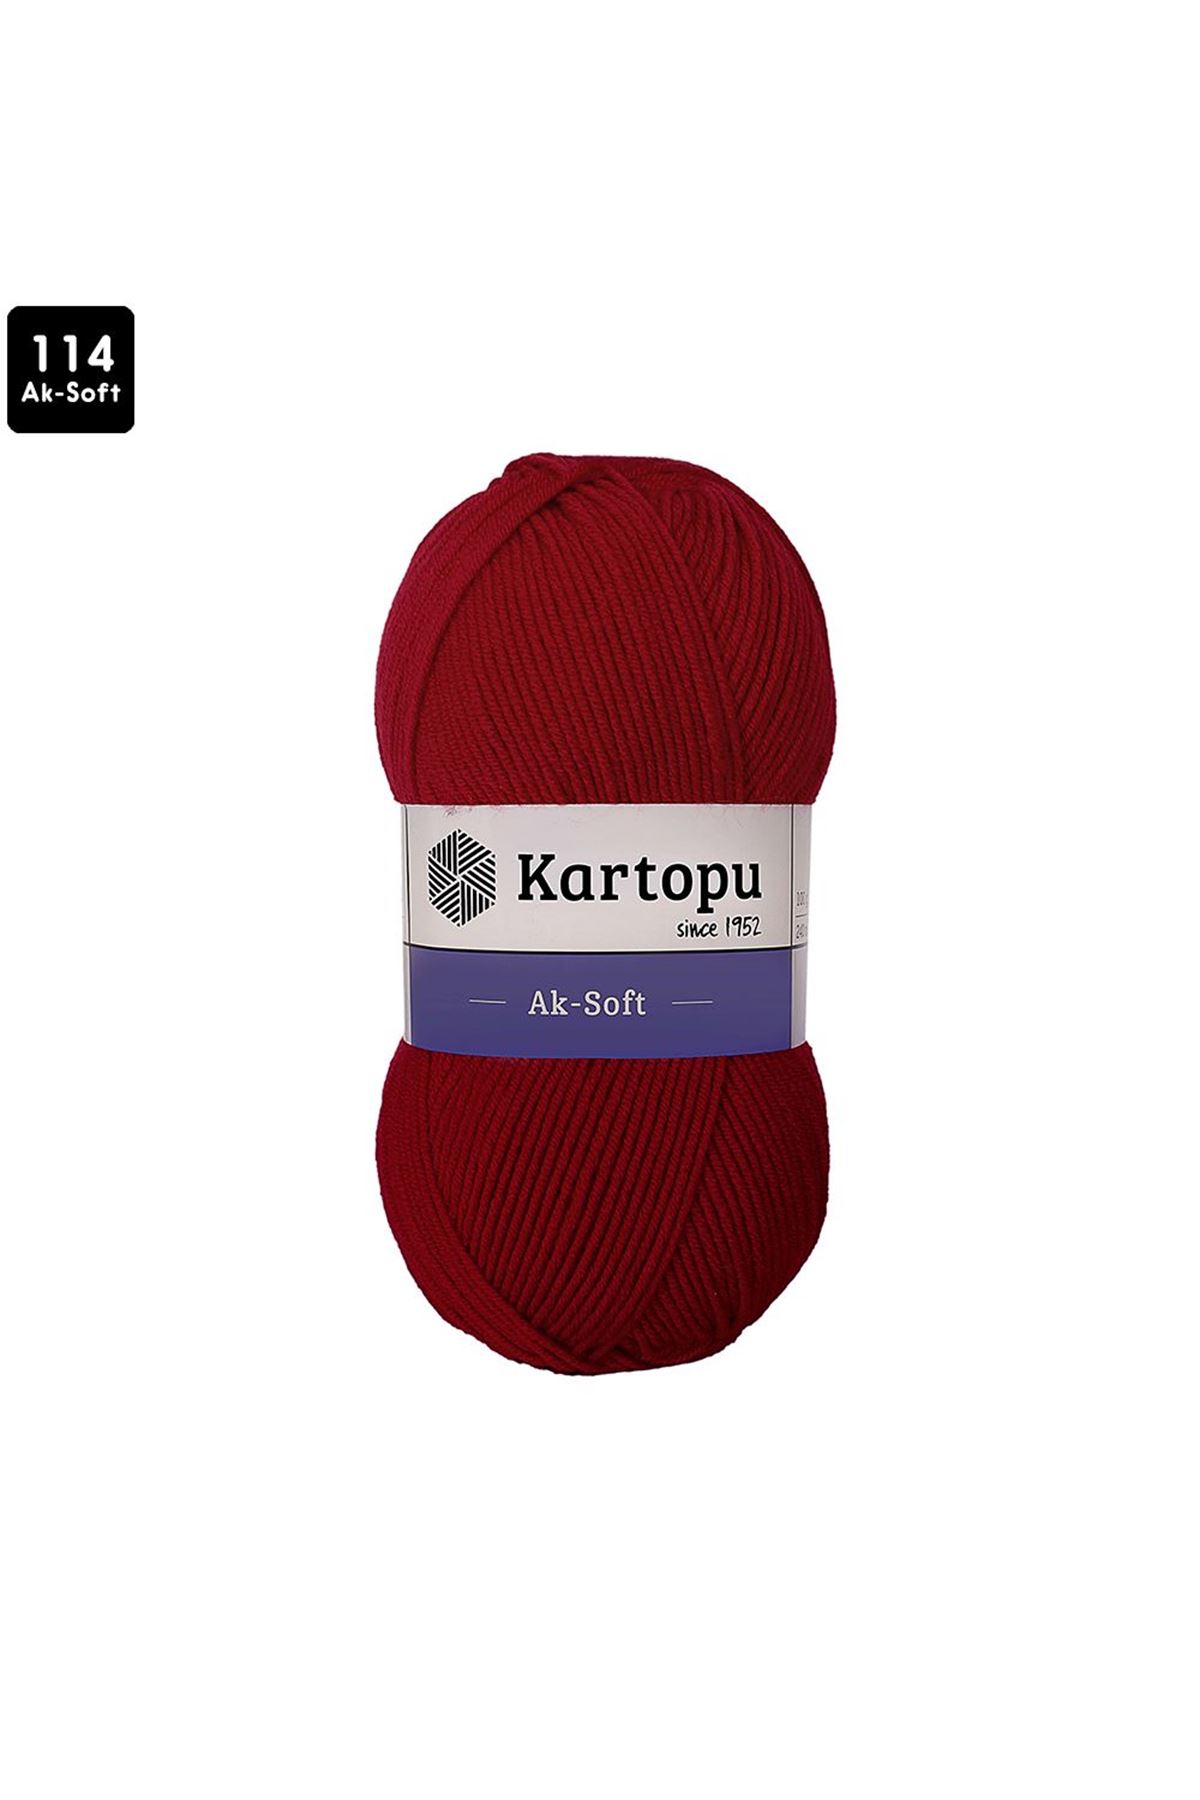 Kartopu Ak-Soft Renk No:114